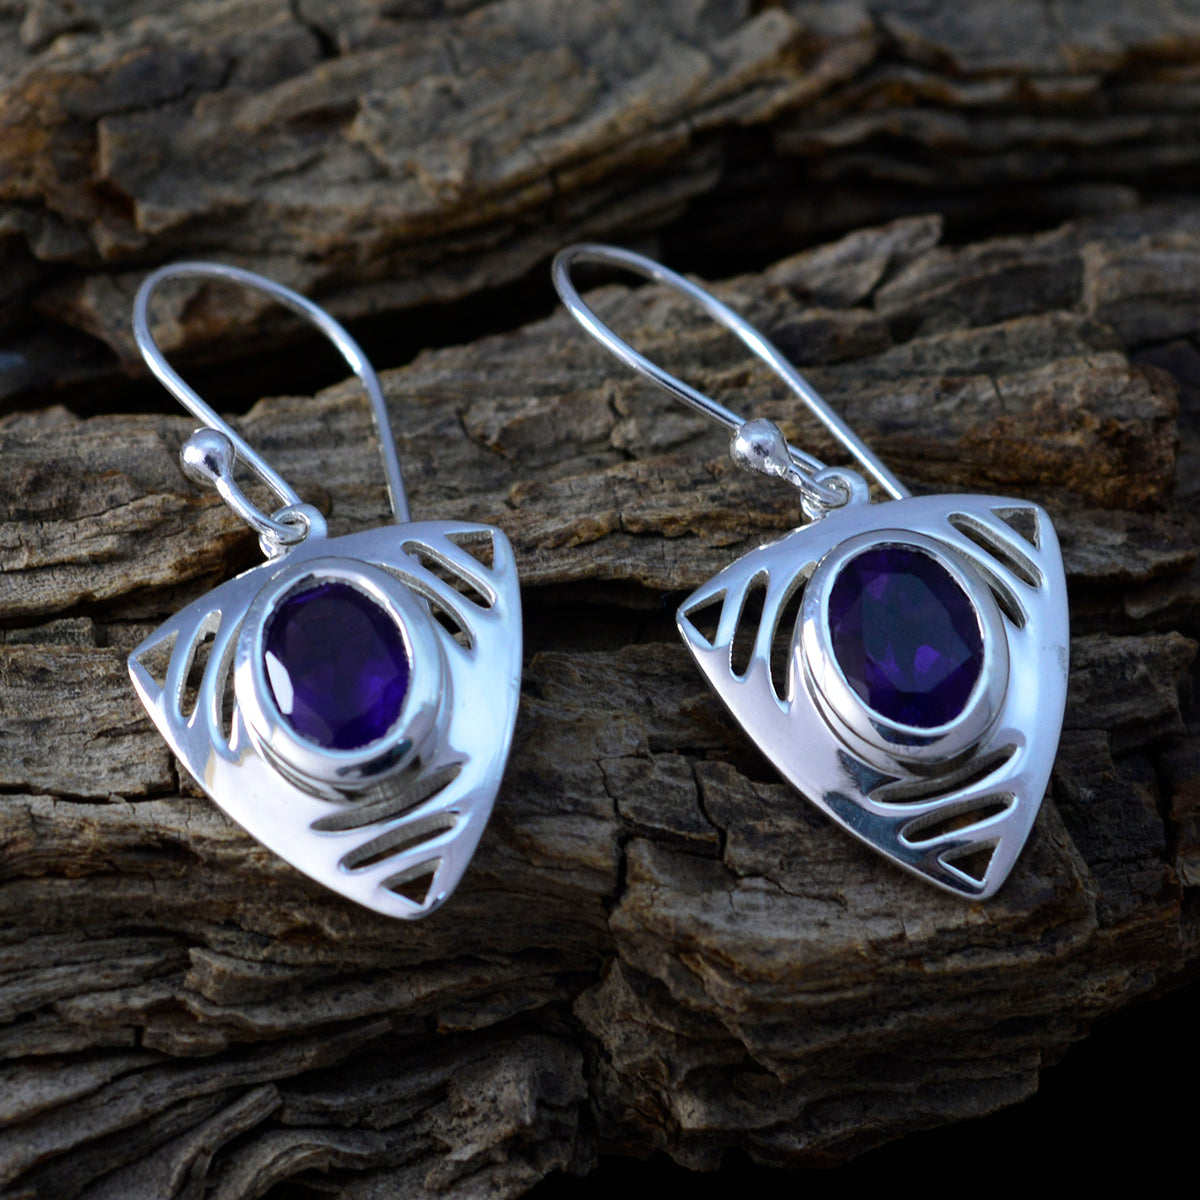 Riyo Nice Gemstone round Faceted Purple Amethyst Silver Earrings teacher's day gift